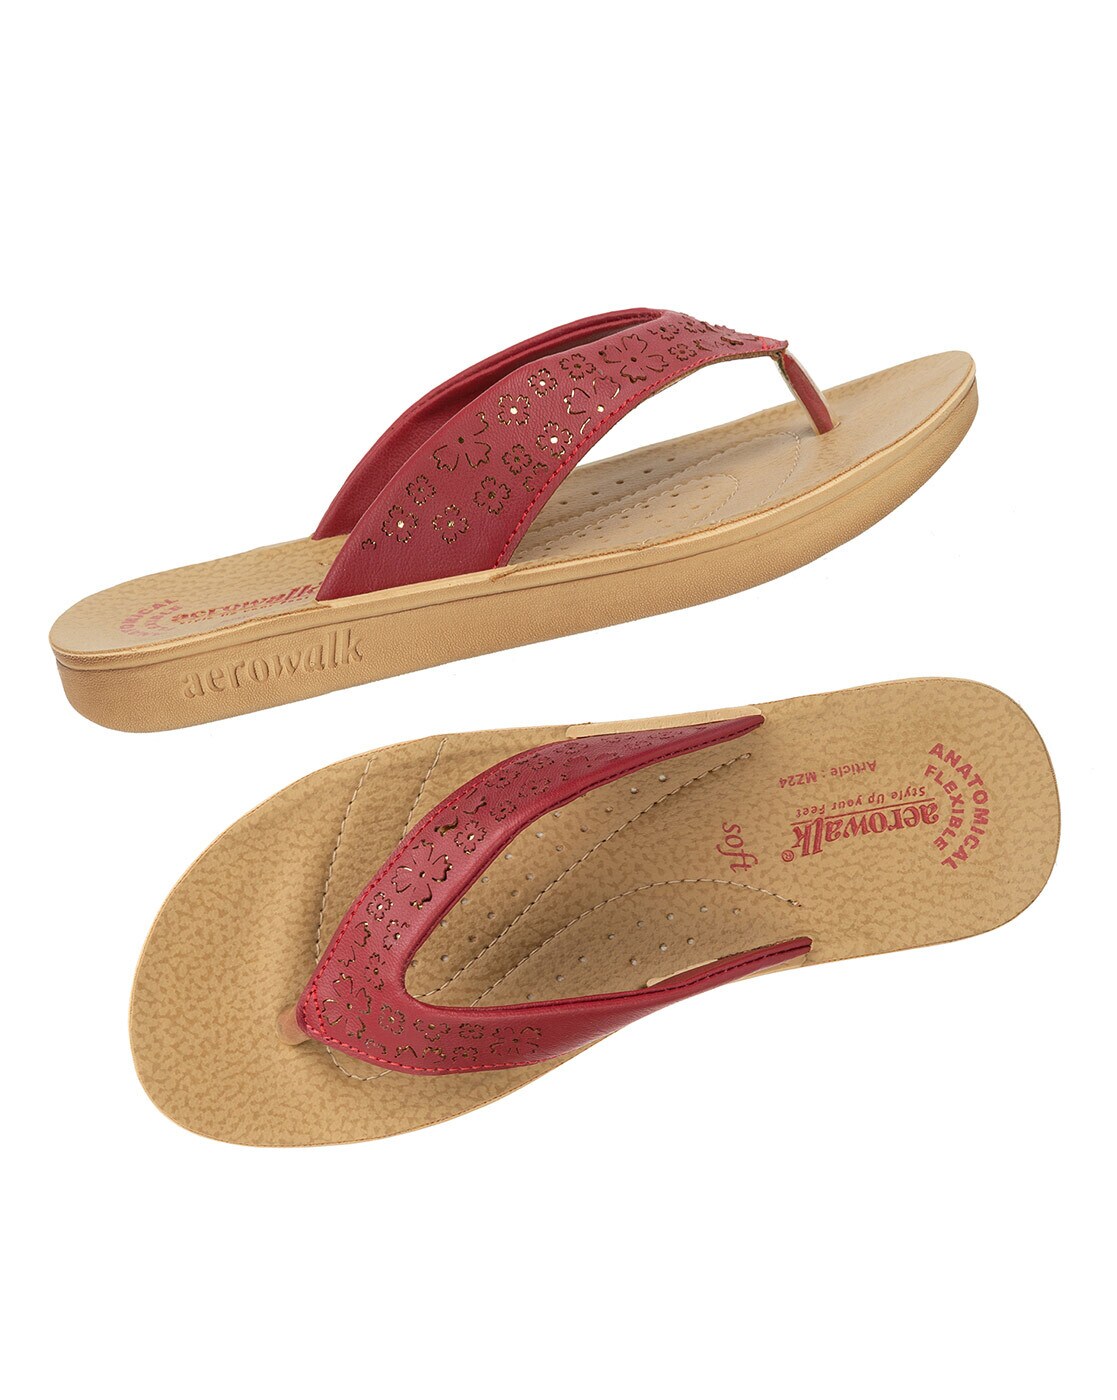 Buy Gold Flip Flop & Slippers for Women by AEROWALK Online | Ajio.com-sgquangbinhtourist.com.vn